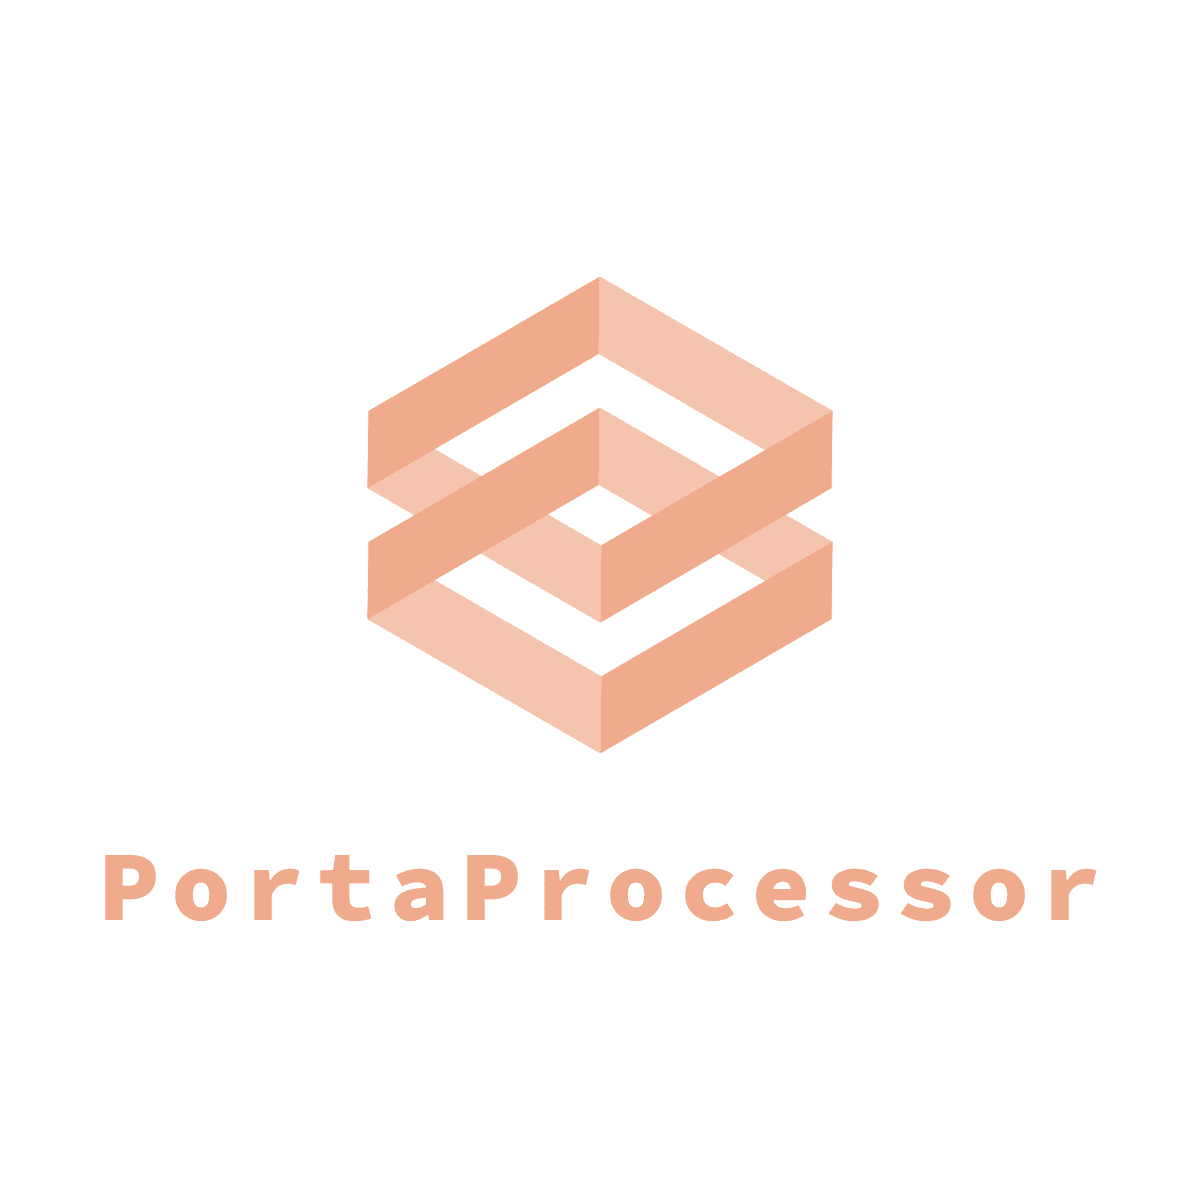 PortaProcessor